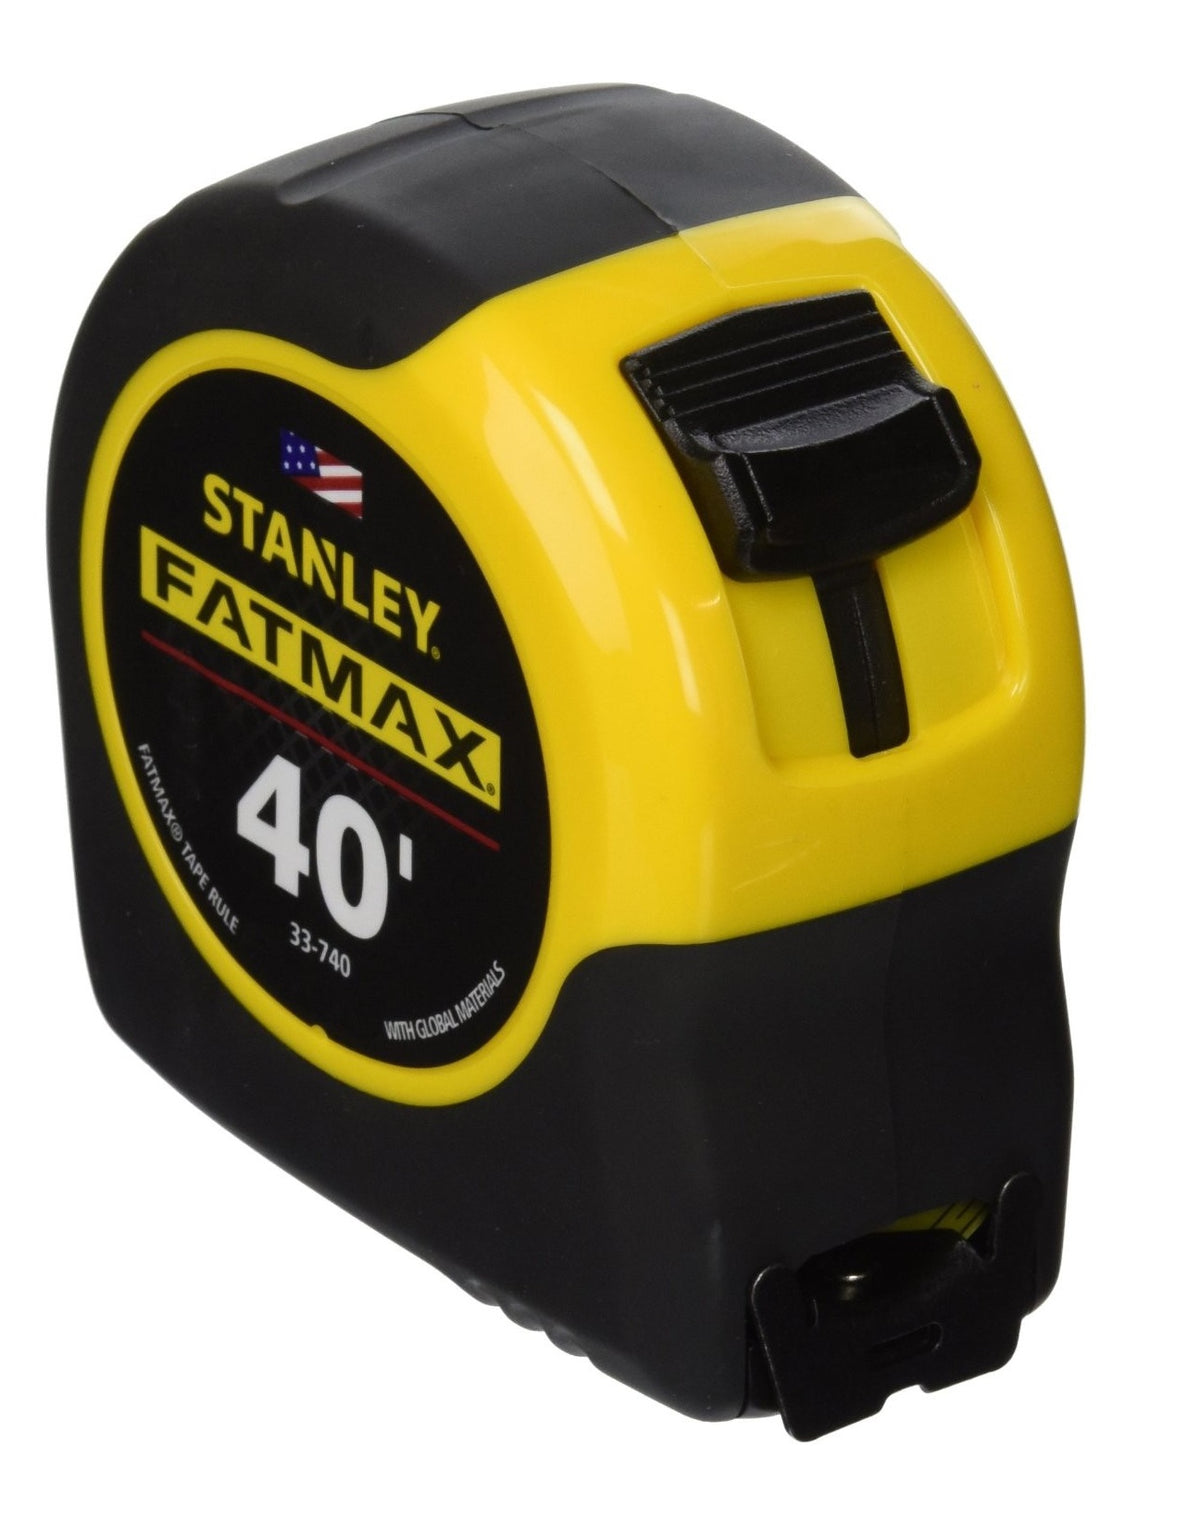 Stanley 33-740 FatMax Tape Measure, 1-1/4" x 40'